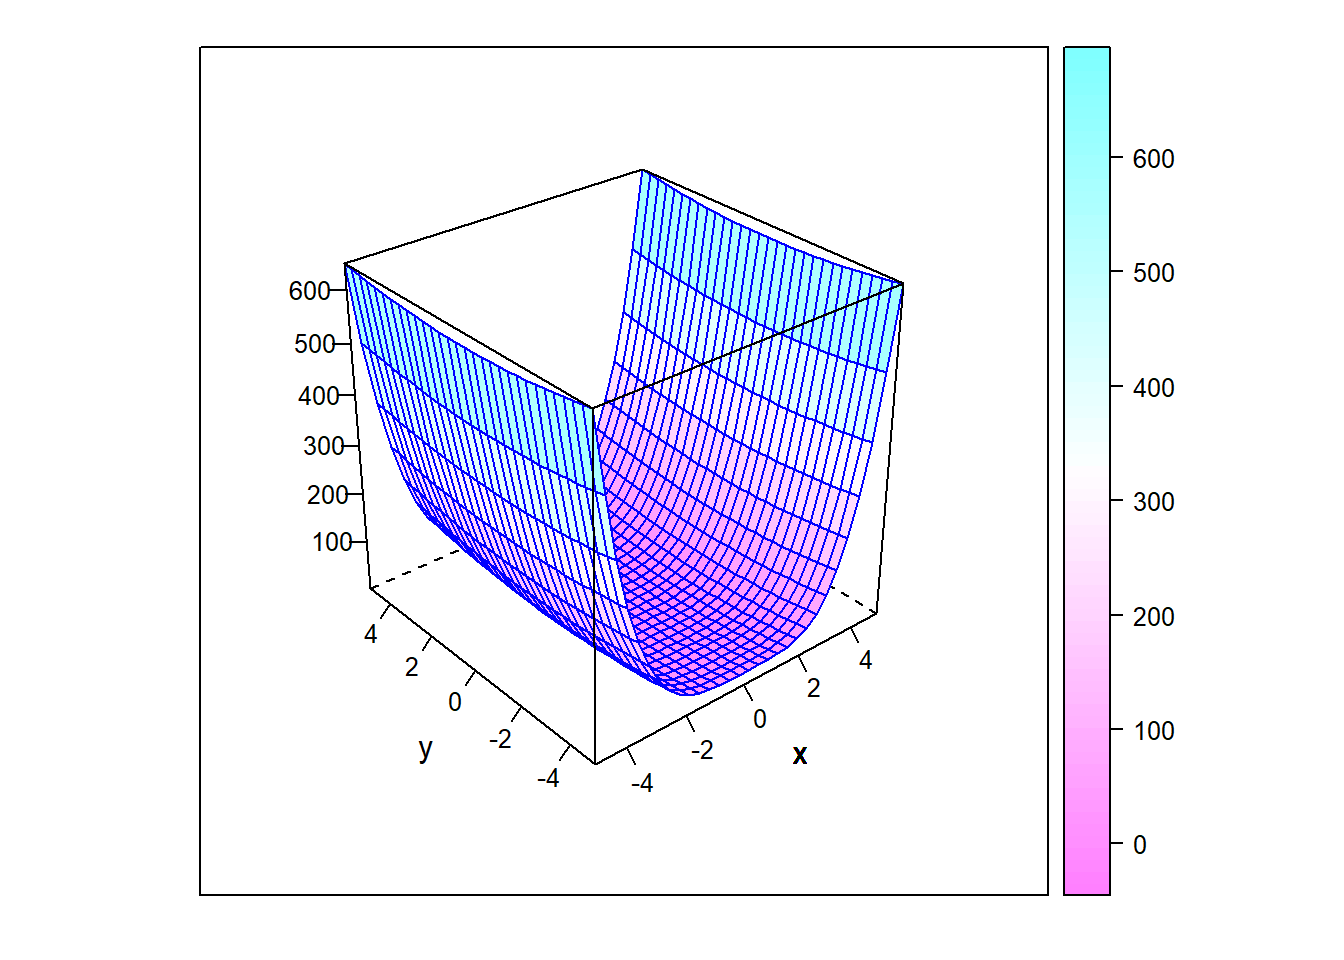 An upwards facing parabola where the local minima is zero